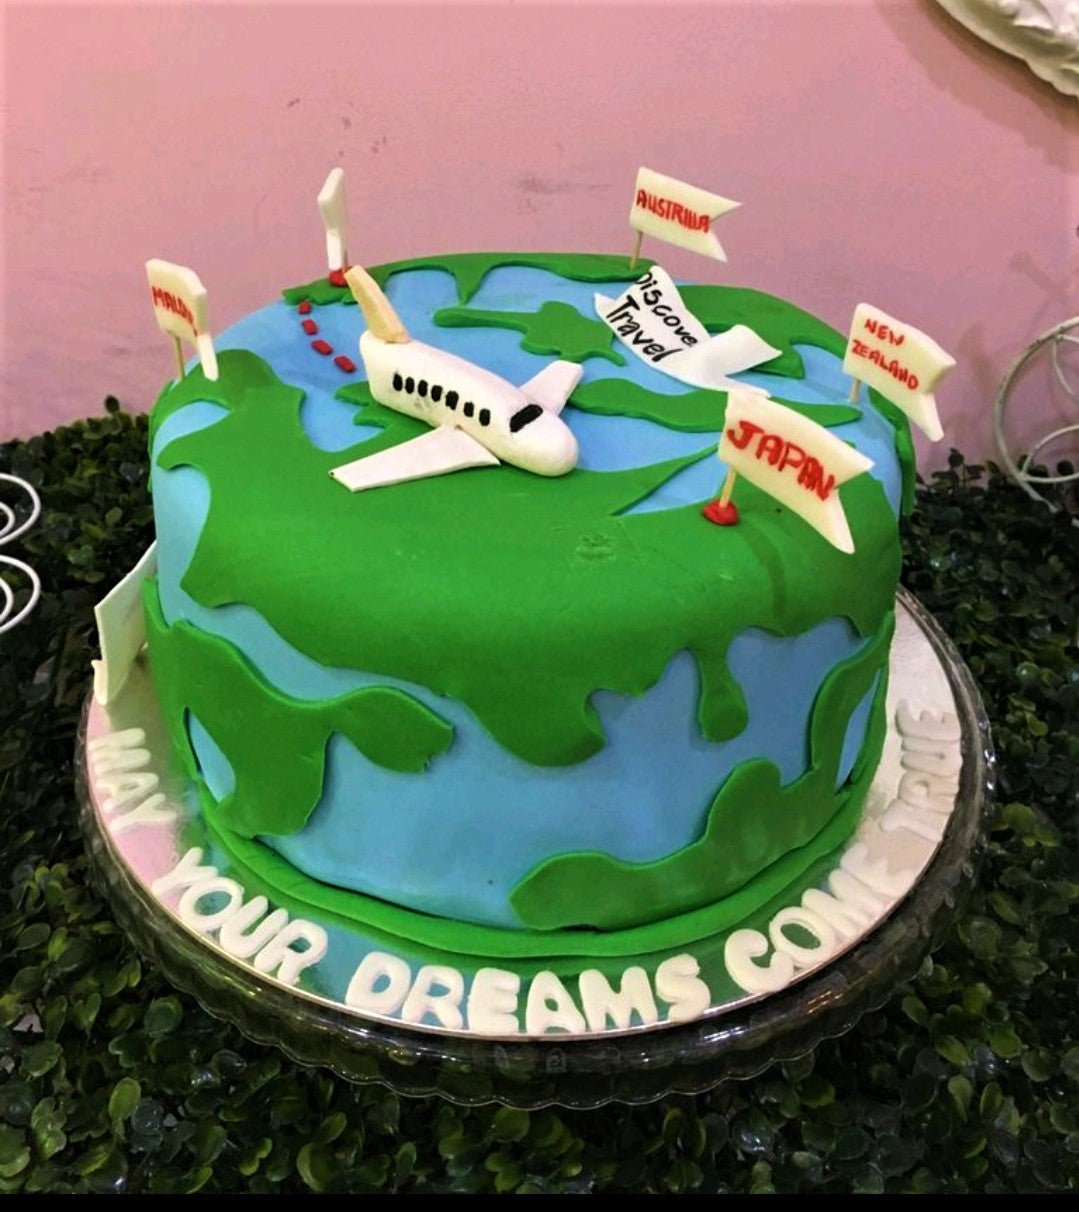 qantas plane cake, birthday cakes sydney ⋆